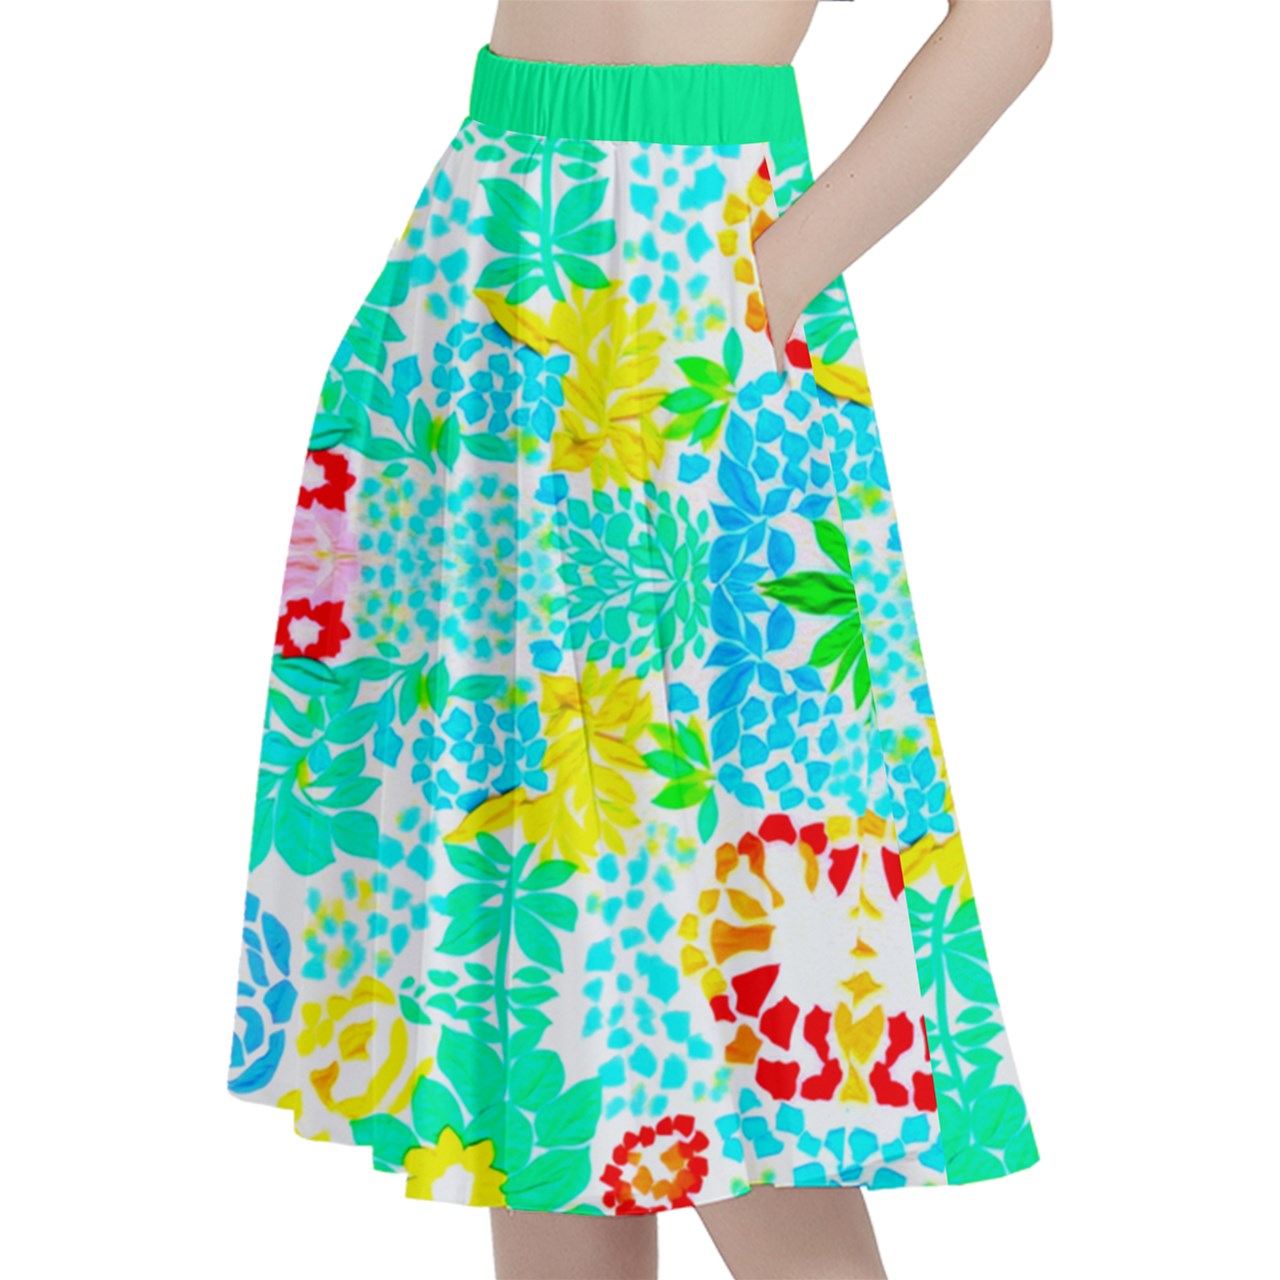 Fabric 563 A-Line Midi Skirt with Pocket